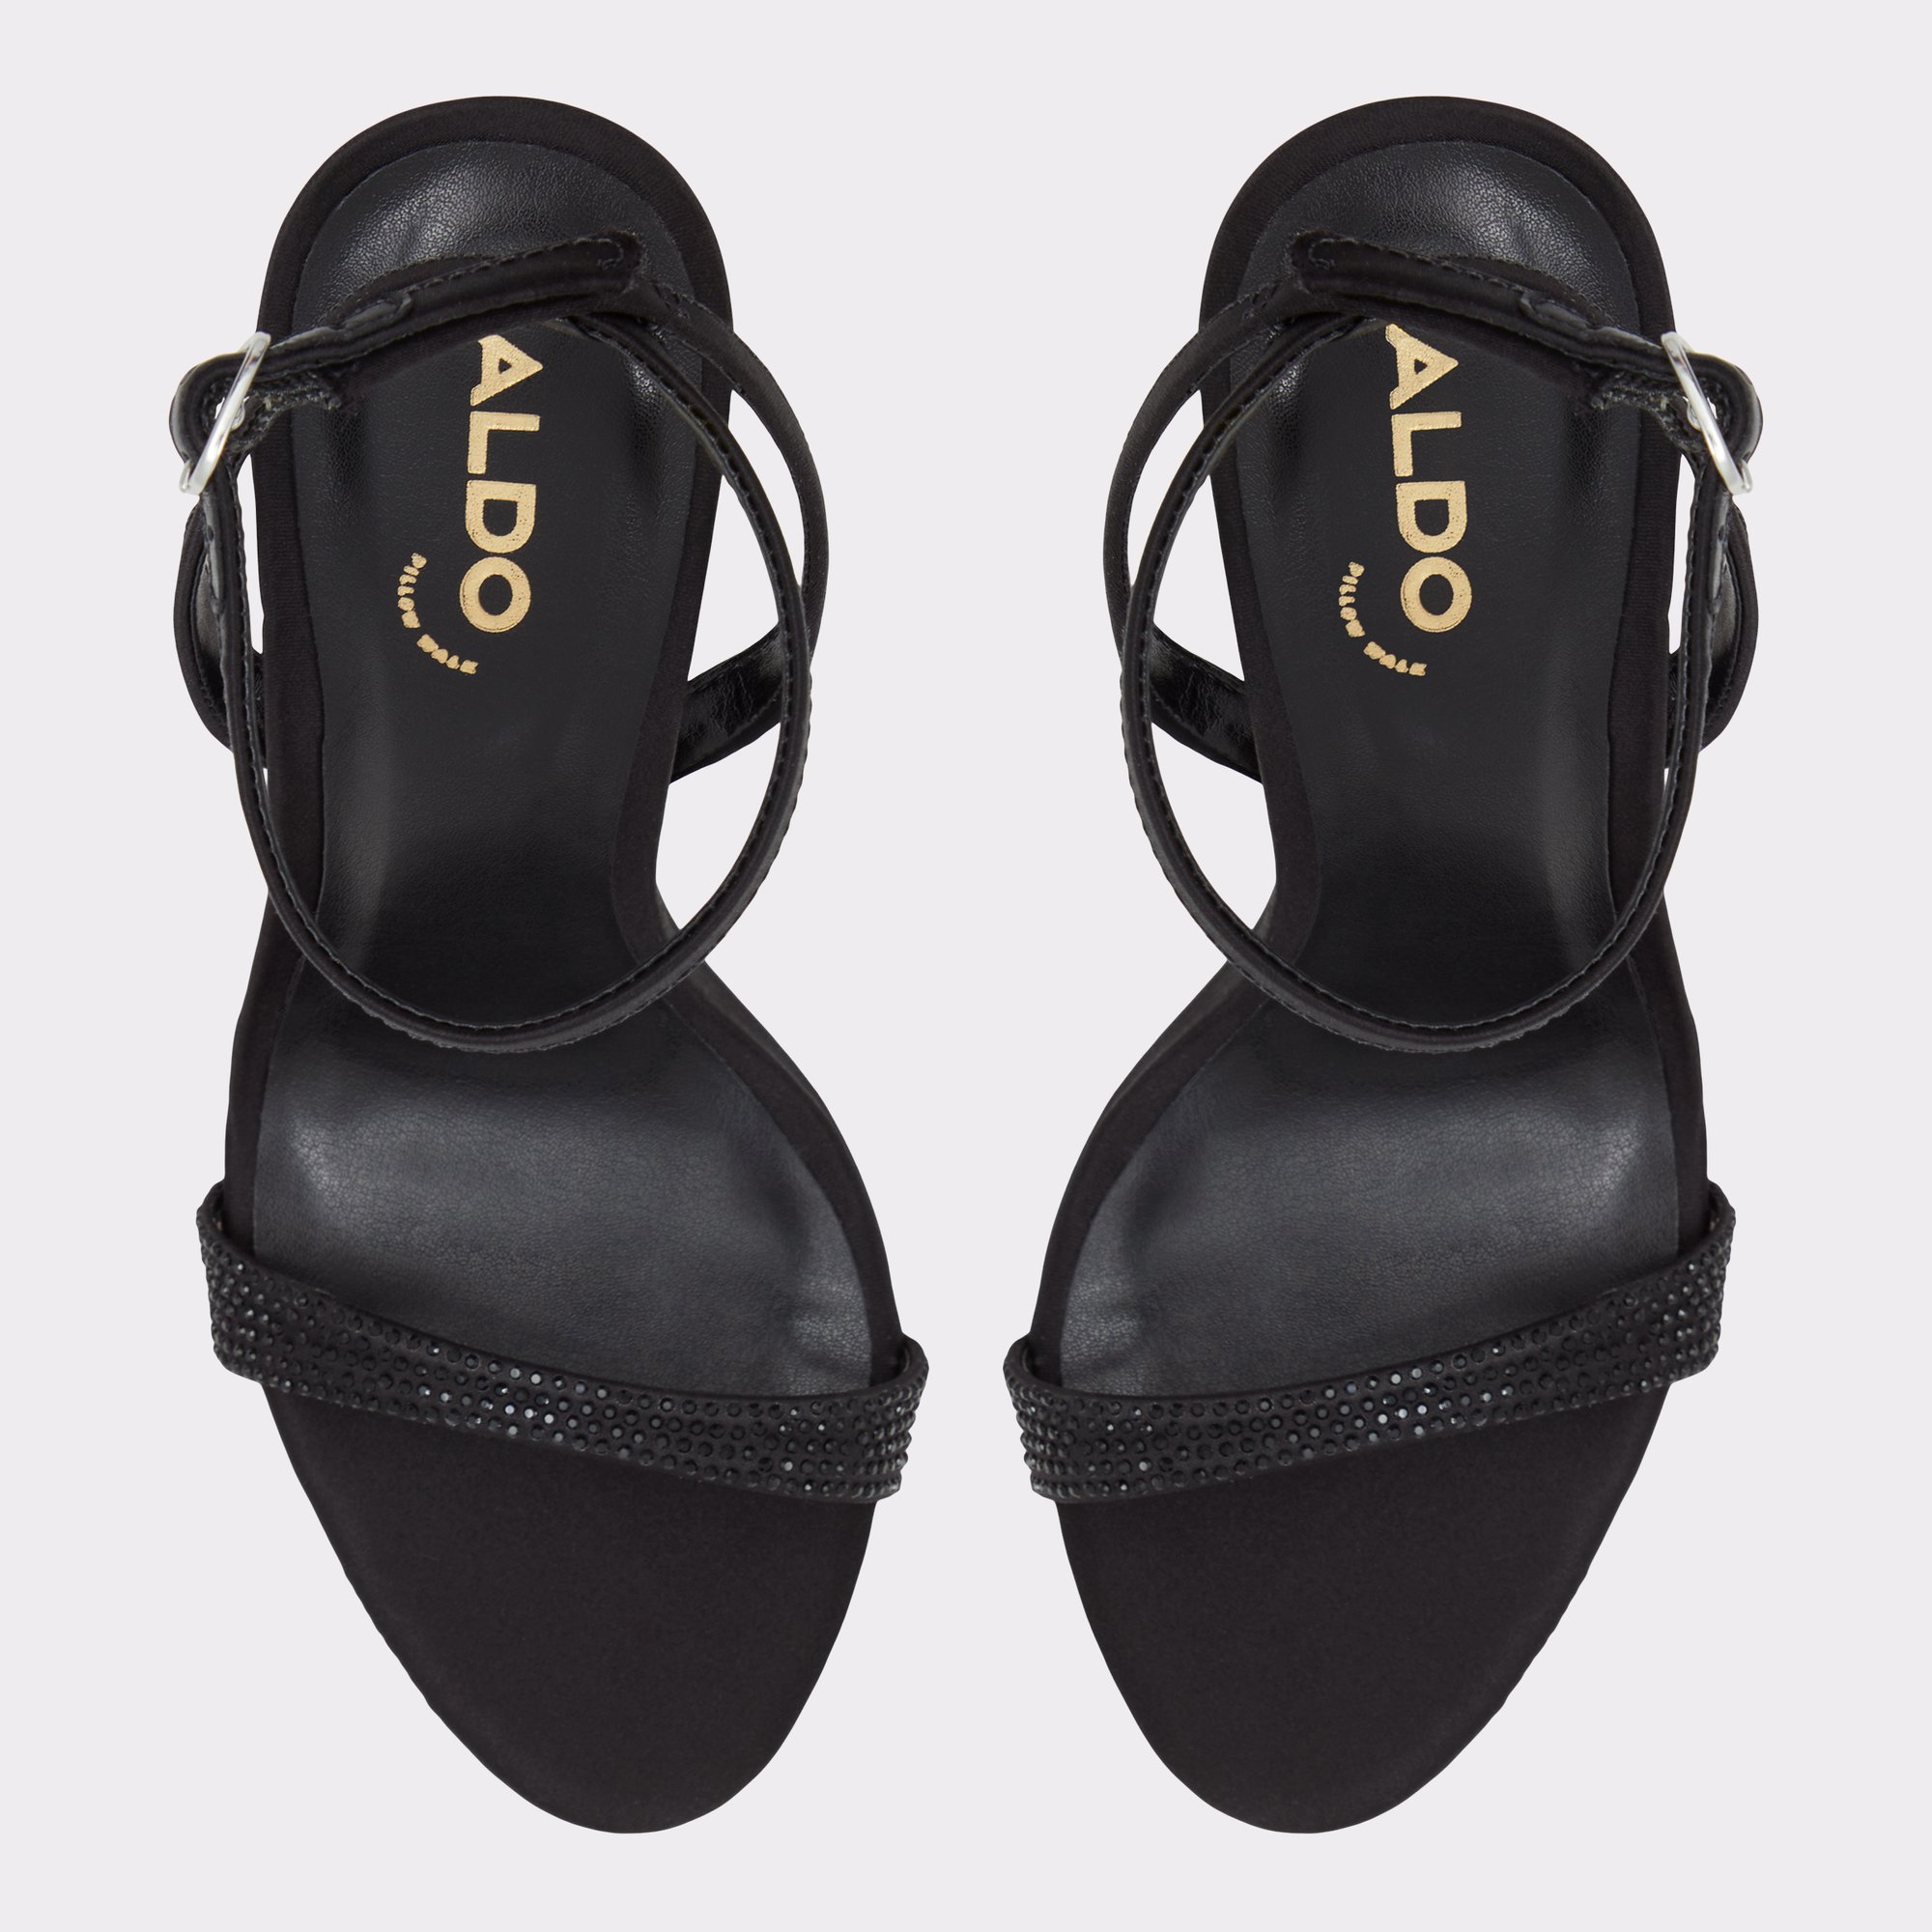 Lydala Black Women's Heeled sandals | ALDO Canada